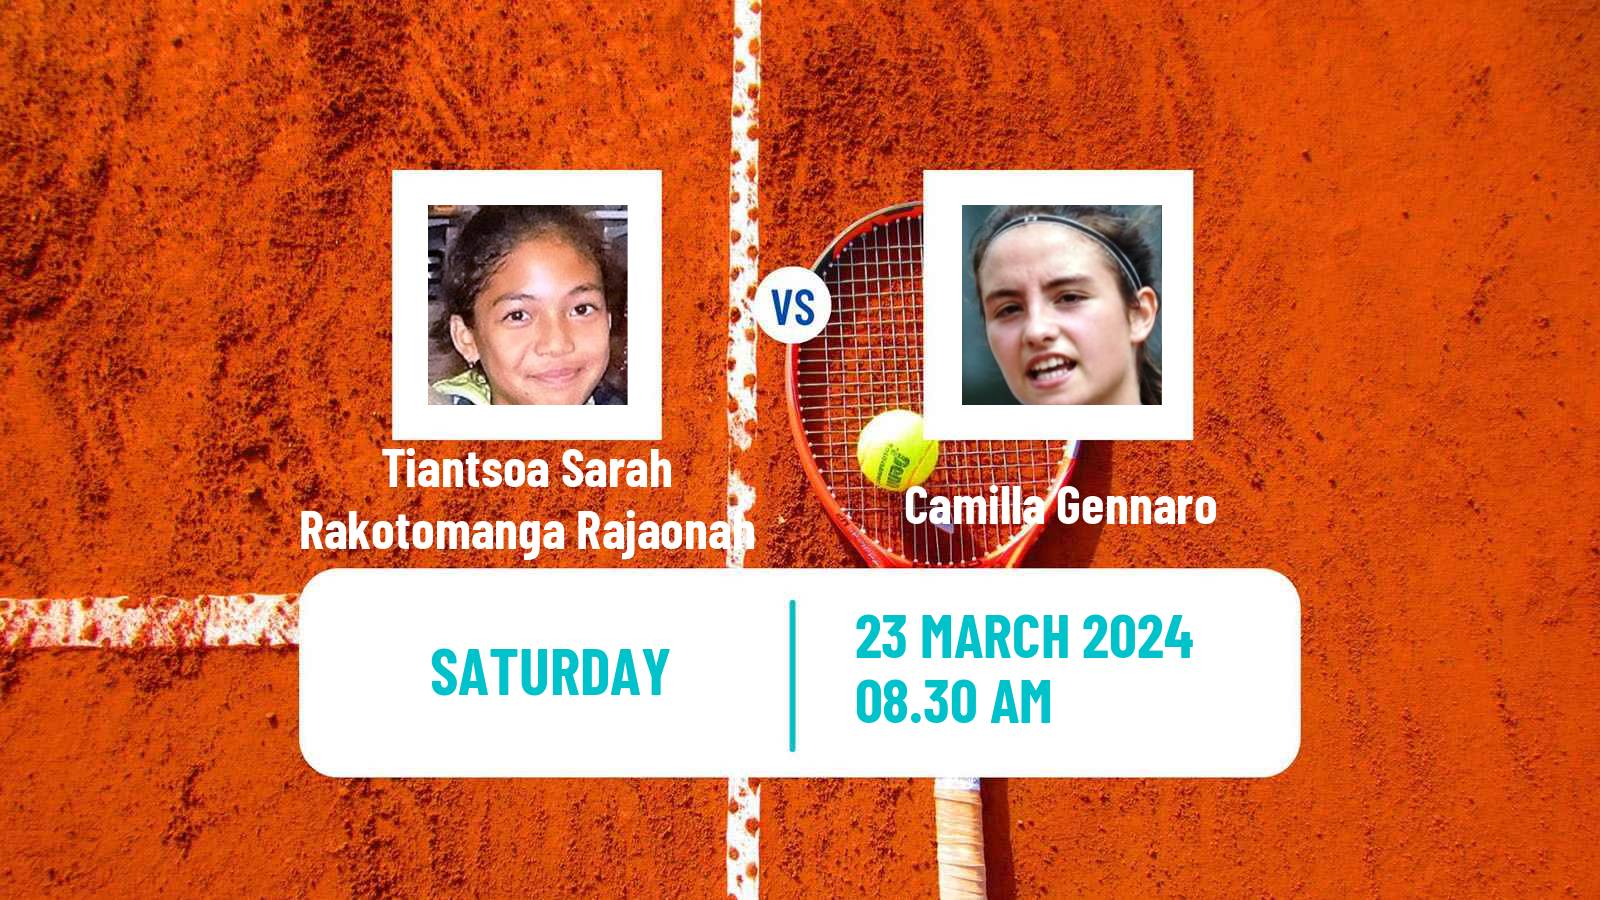 Tennis ITF W15 Le Havre Women Tiantsoa Sarah Rakotomanga Rajaonah - Camilla Gennaro